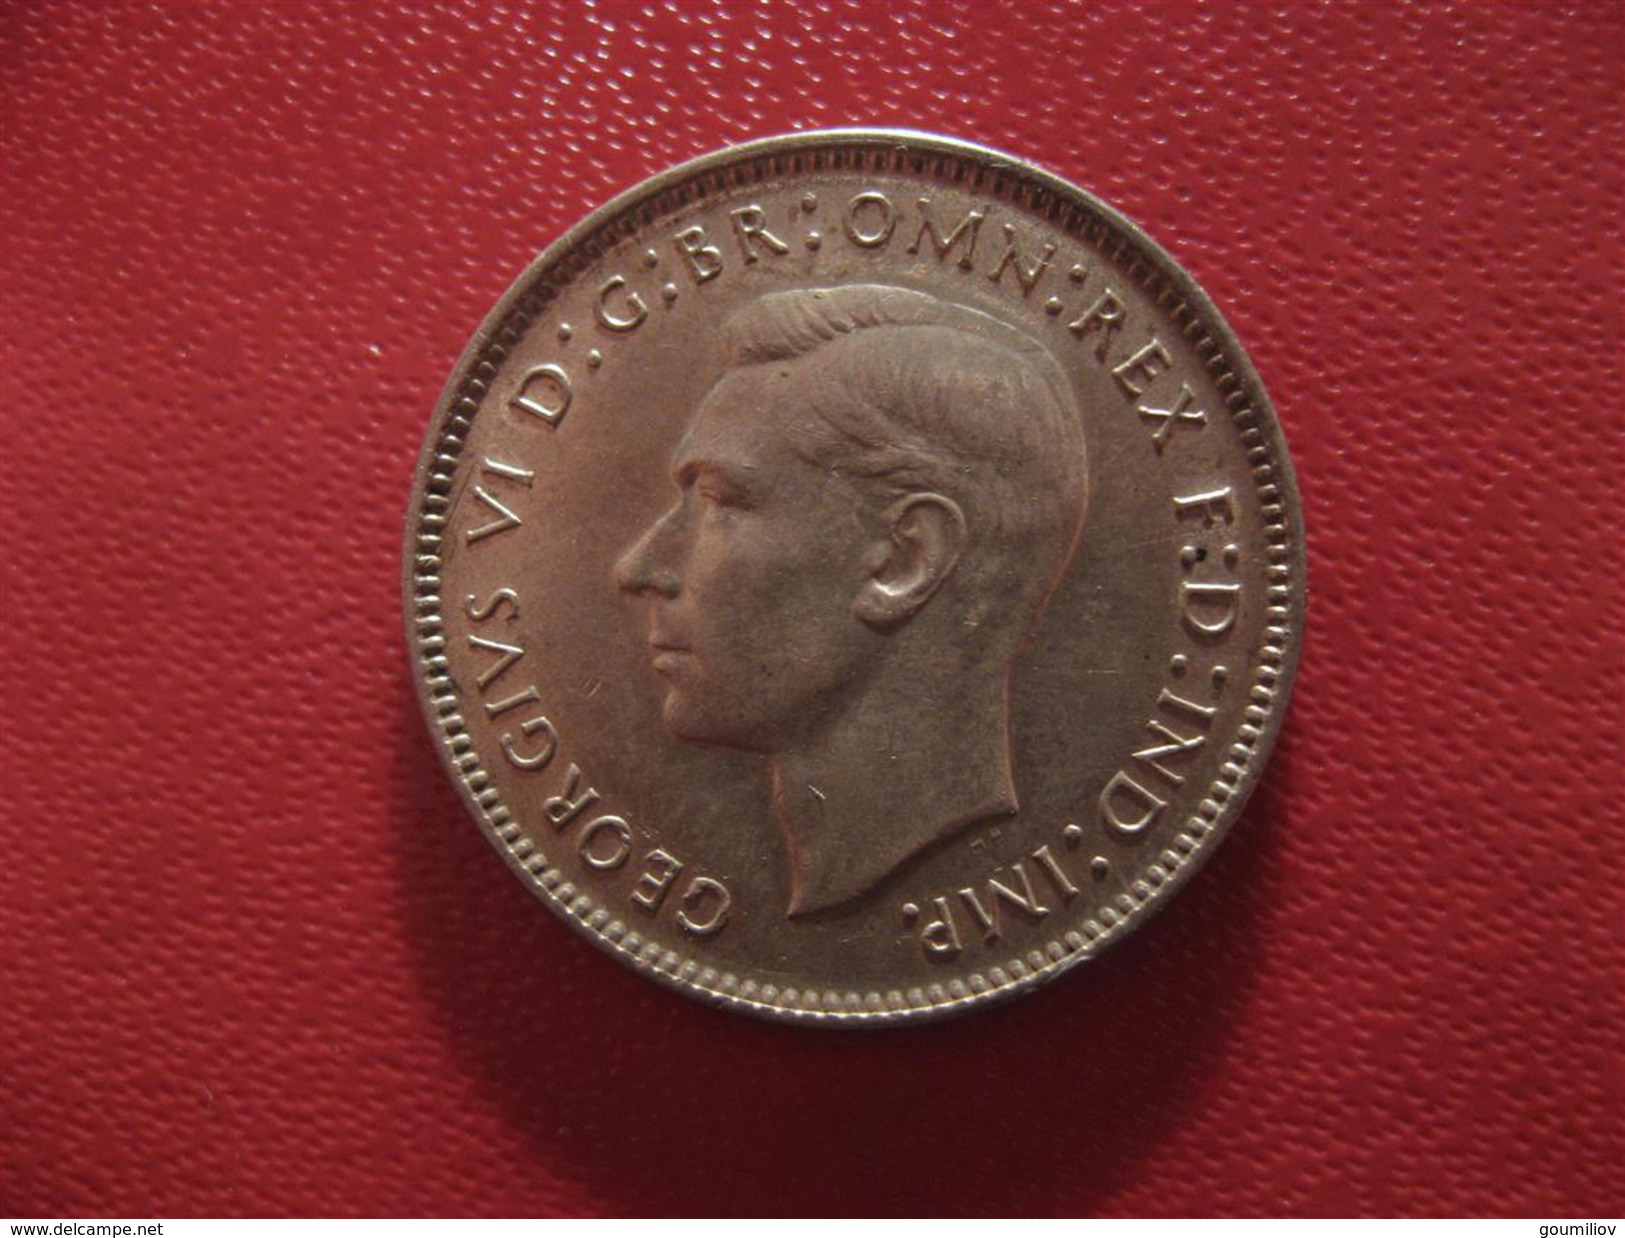 Australie - 6 Pence 1943 D George VI 1716 - Sixpence